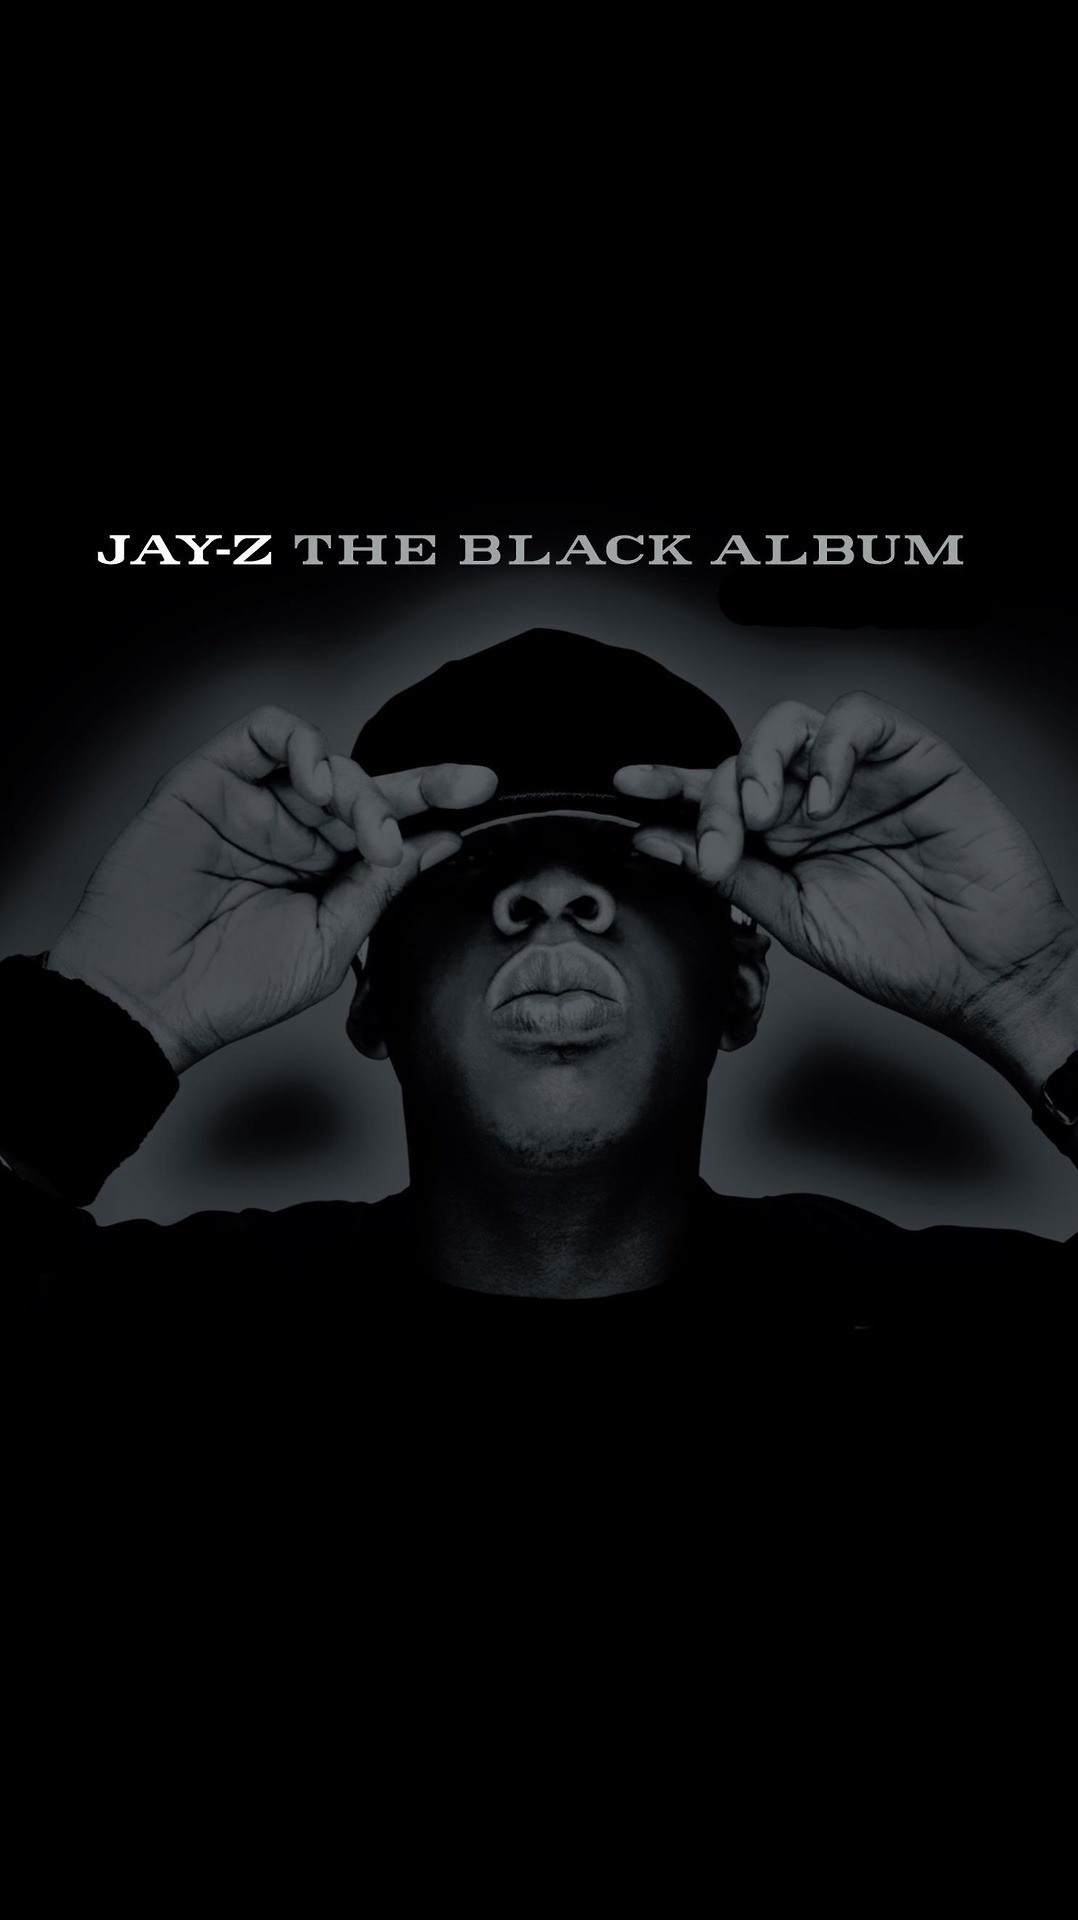 The Black Album - Jay Z The Black Album - 1078x1920 Wallpaper 